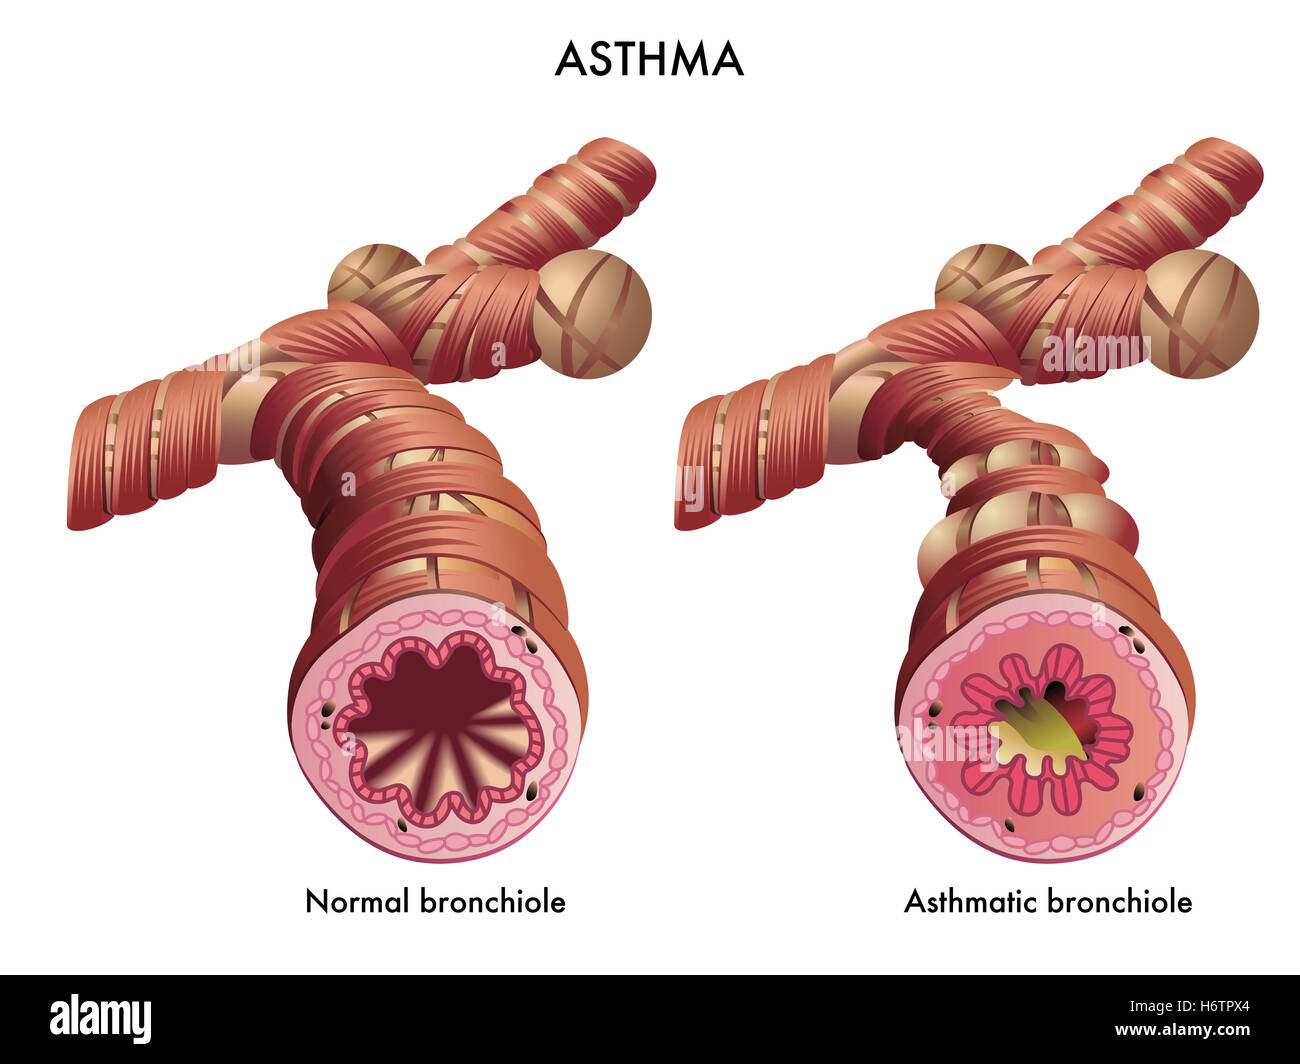 Asthma-Krankheit Asthma Infektion Atmung Krankheit Krankheit Inhalator Brust Bronchitis Bronchiolitis Asthma Bronchialasthma Stockfoto